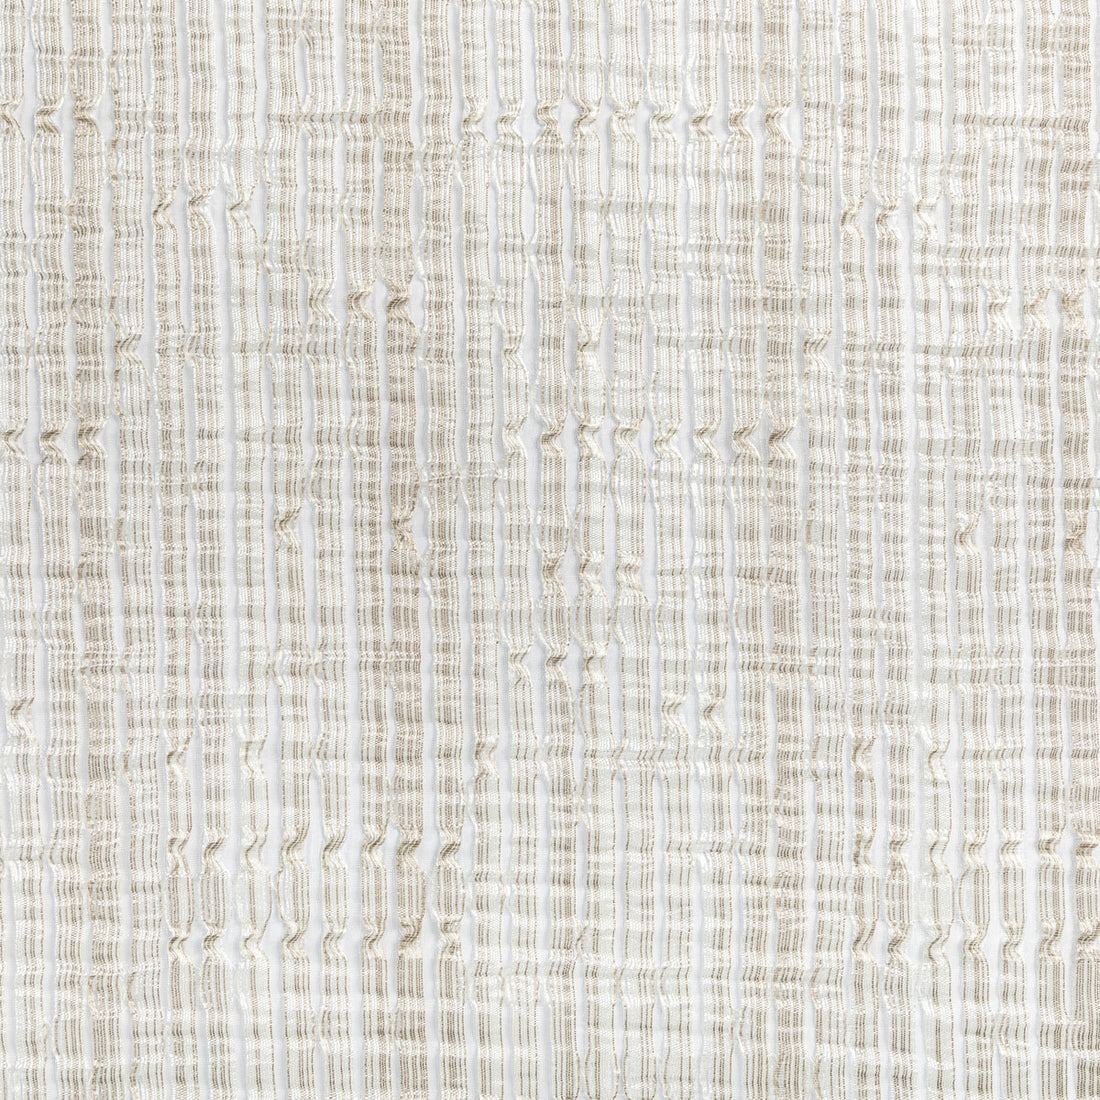 Kravet Basics fabric in 4497-16 color - pattern 4497.16.0 - by Kravet Basics in the Sheer Outlook collection